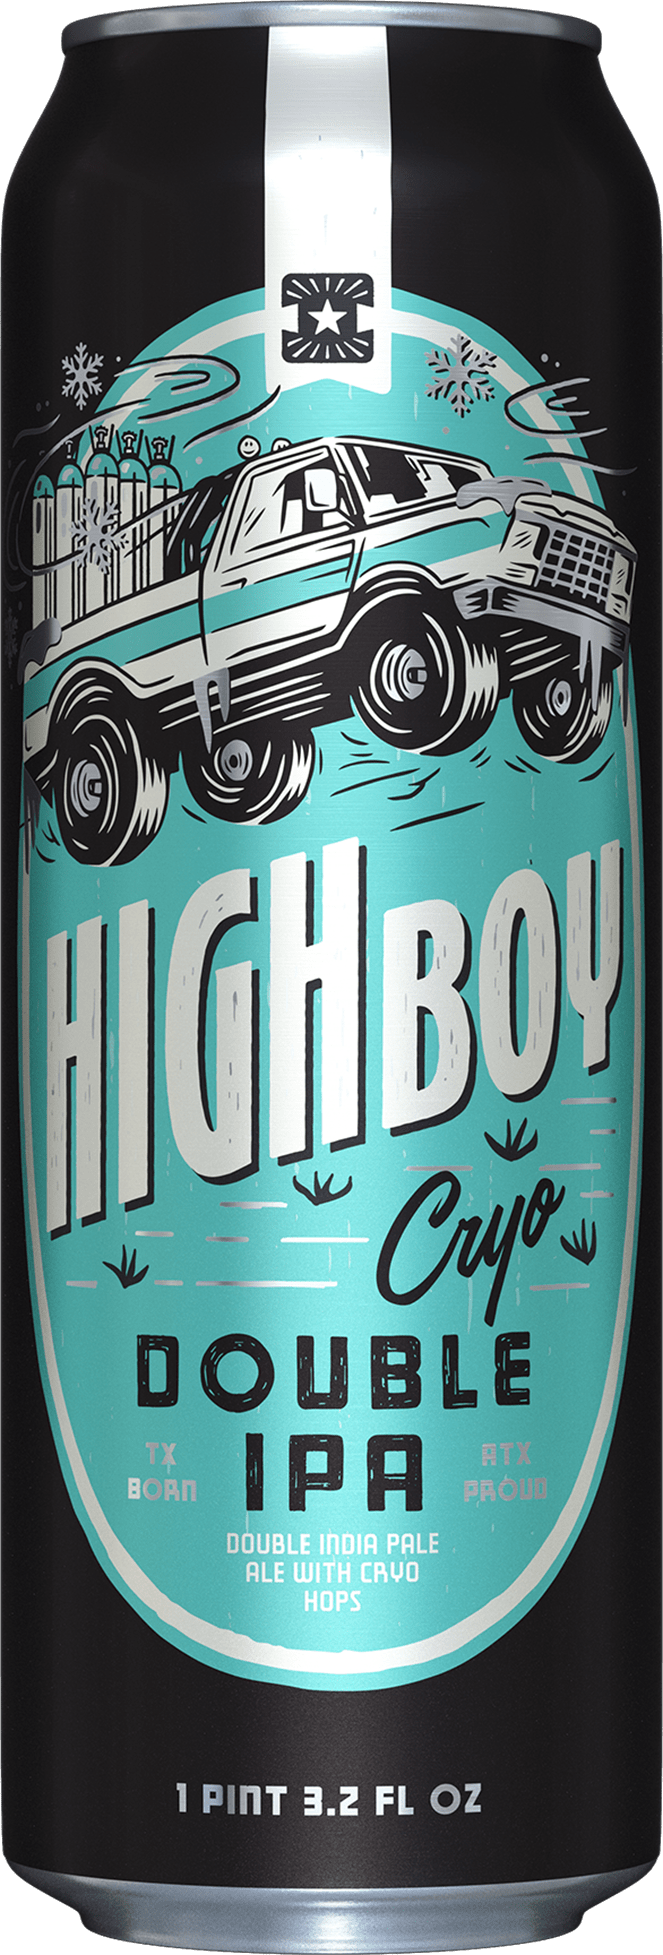 Highboy: Cryo